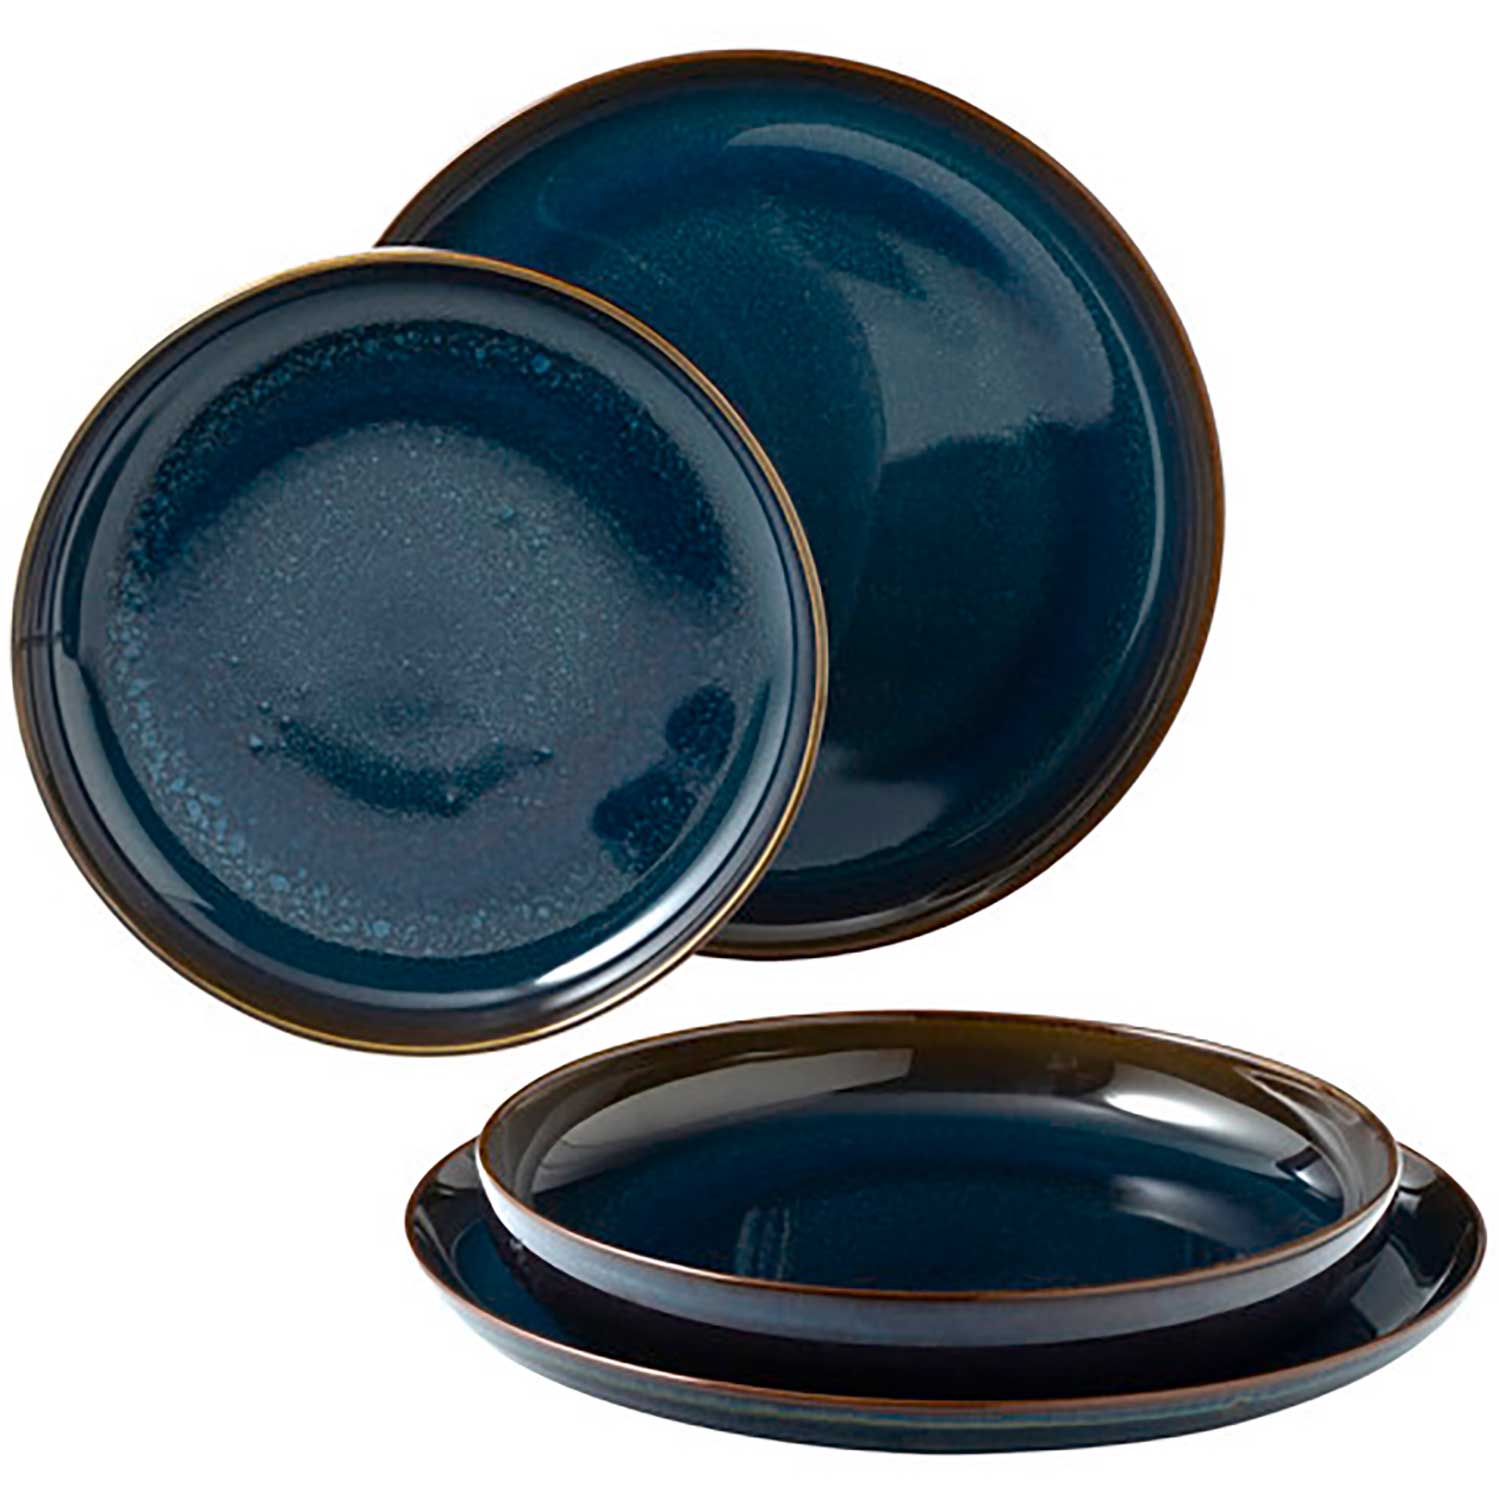 Villeroy & Boch 8-piece Set of plates in khaki/ blue/ brown